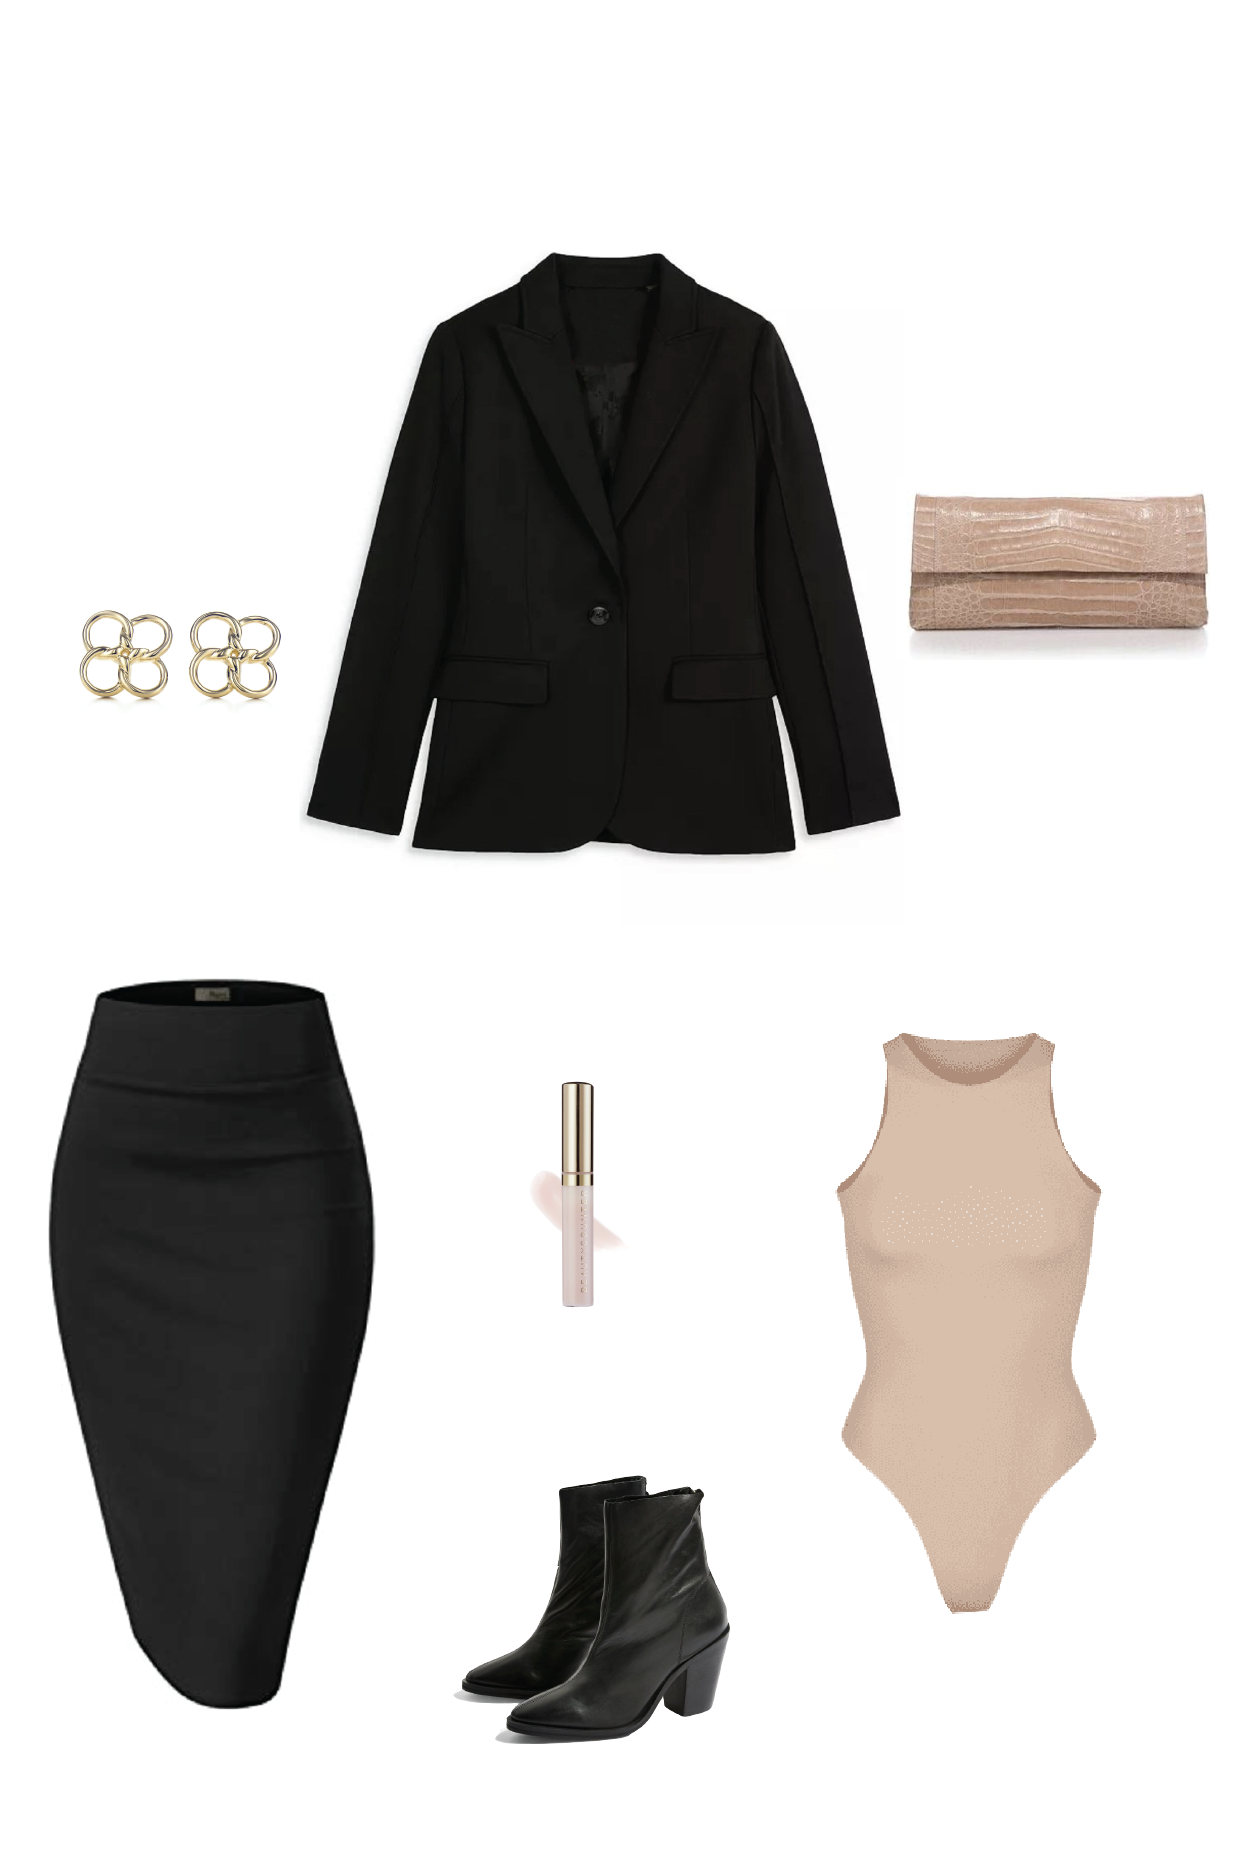 Glow Fashion Boutique black blazer styling inspo